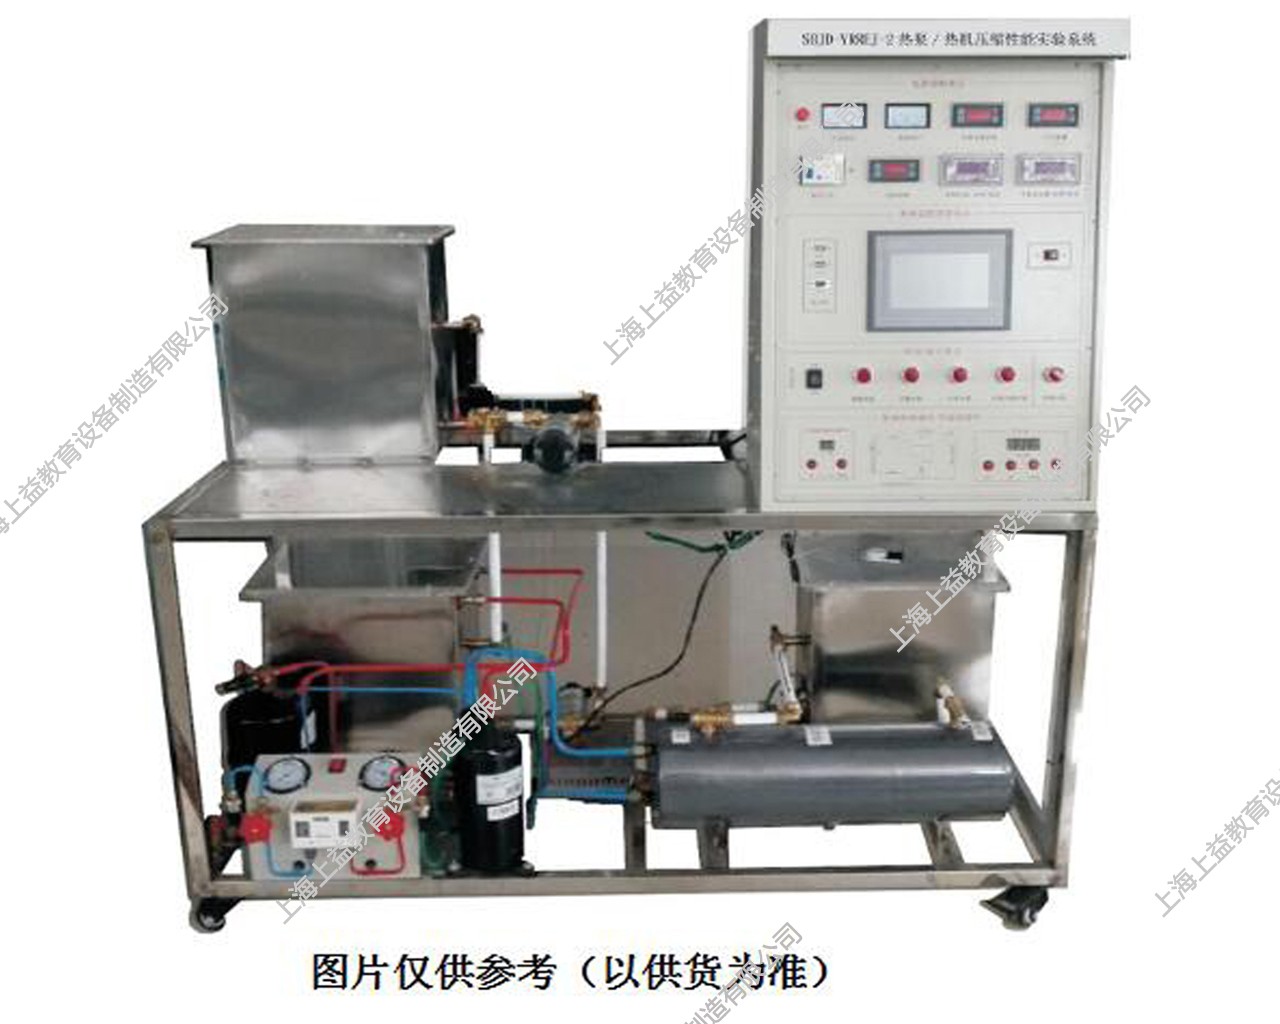 SBJD-YRREJ-2热泵/热机压缩性能实验系统